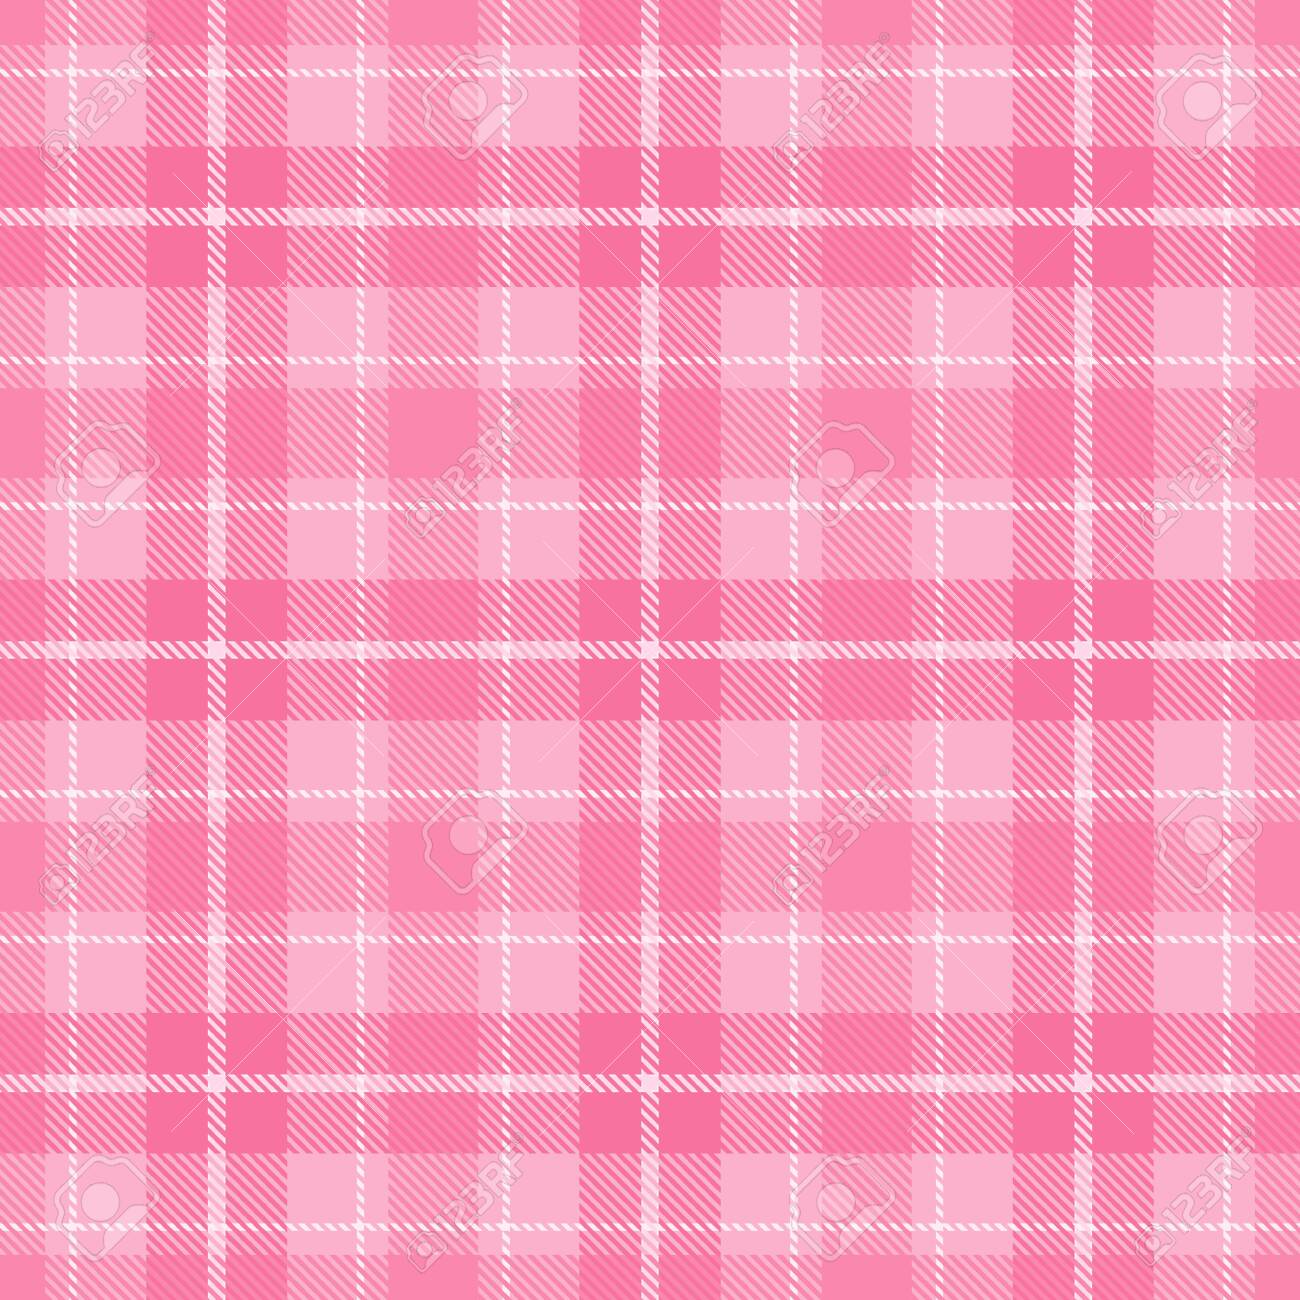 Pink And White Tartan Plaid Seamless Pattern Background Royalty